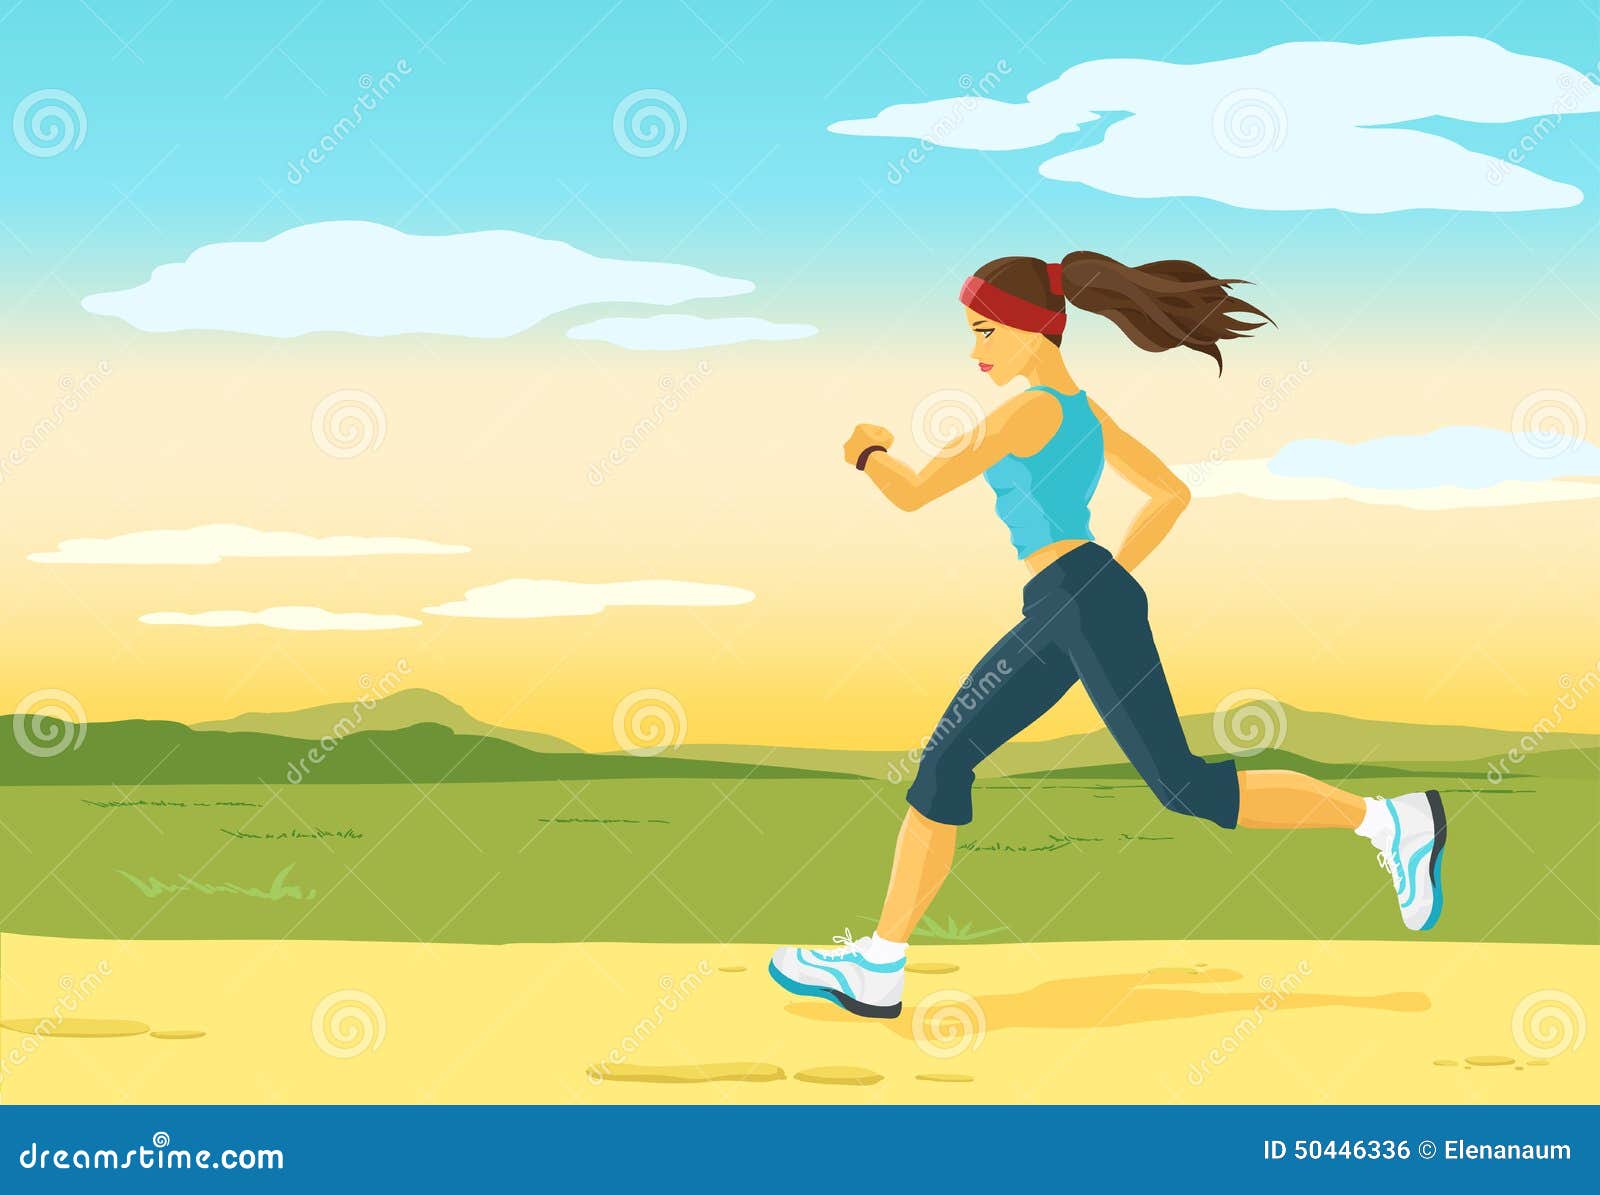 clipart girl jogging - photo #34